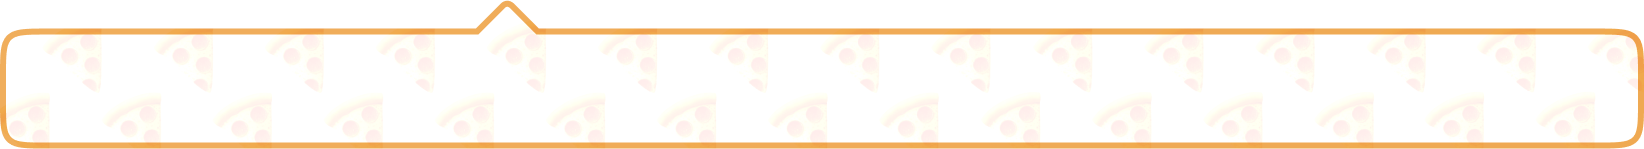 Pizza emoji background